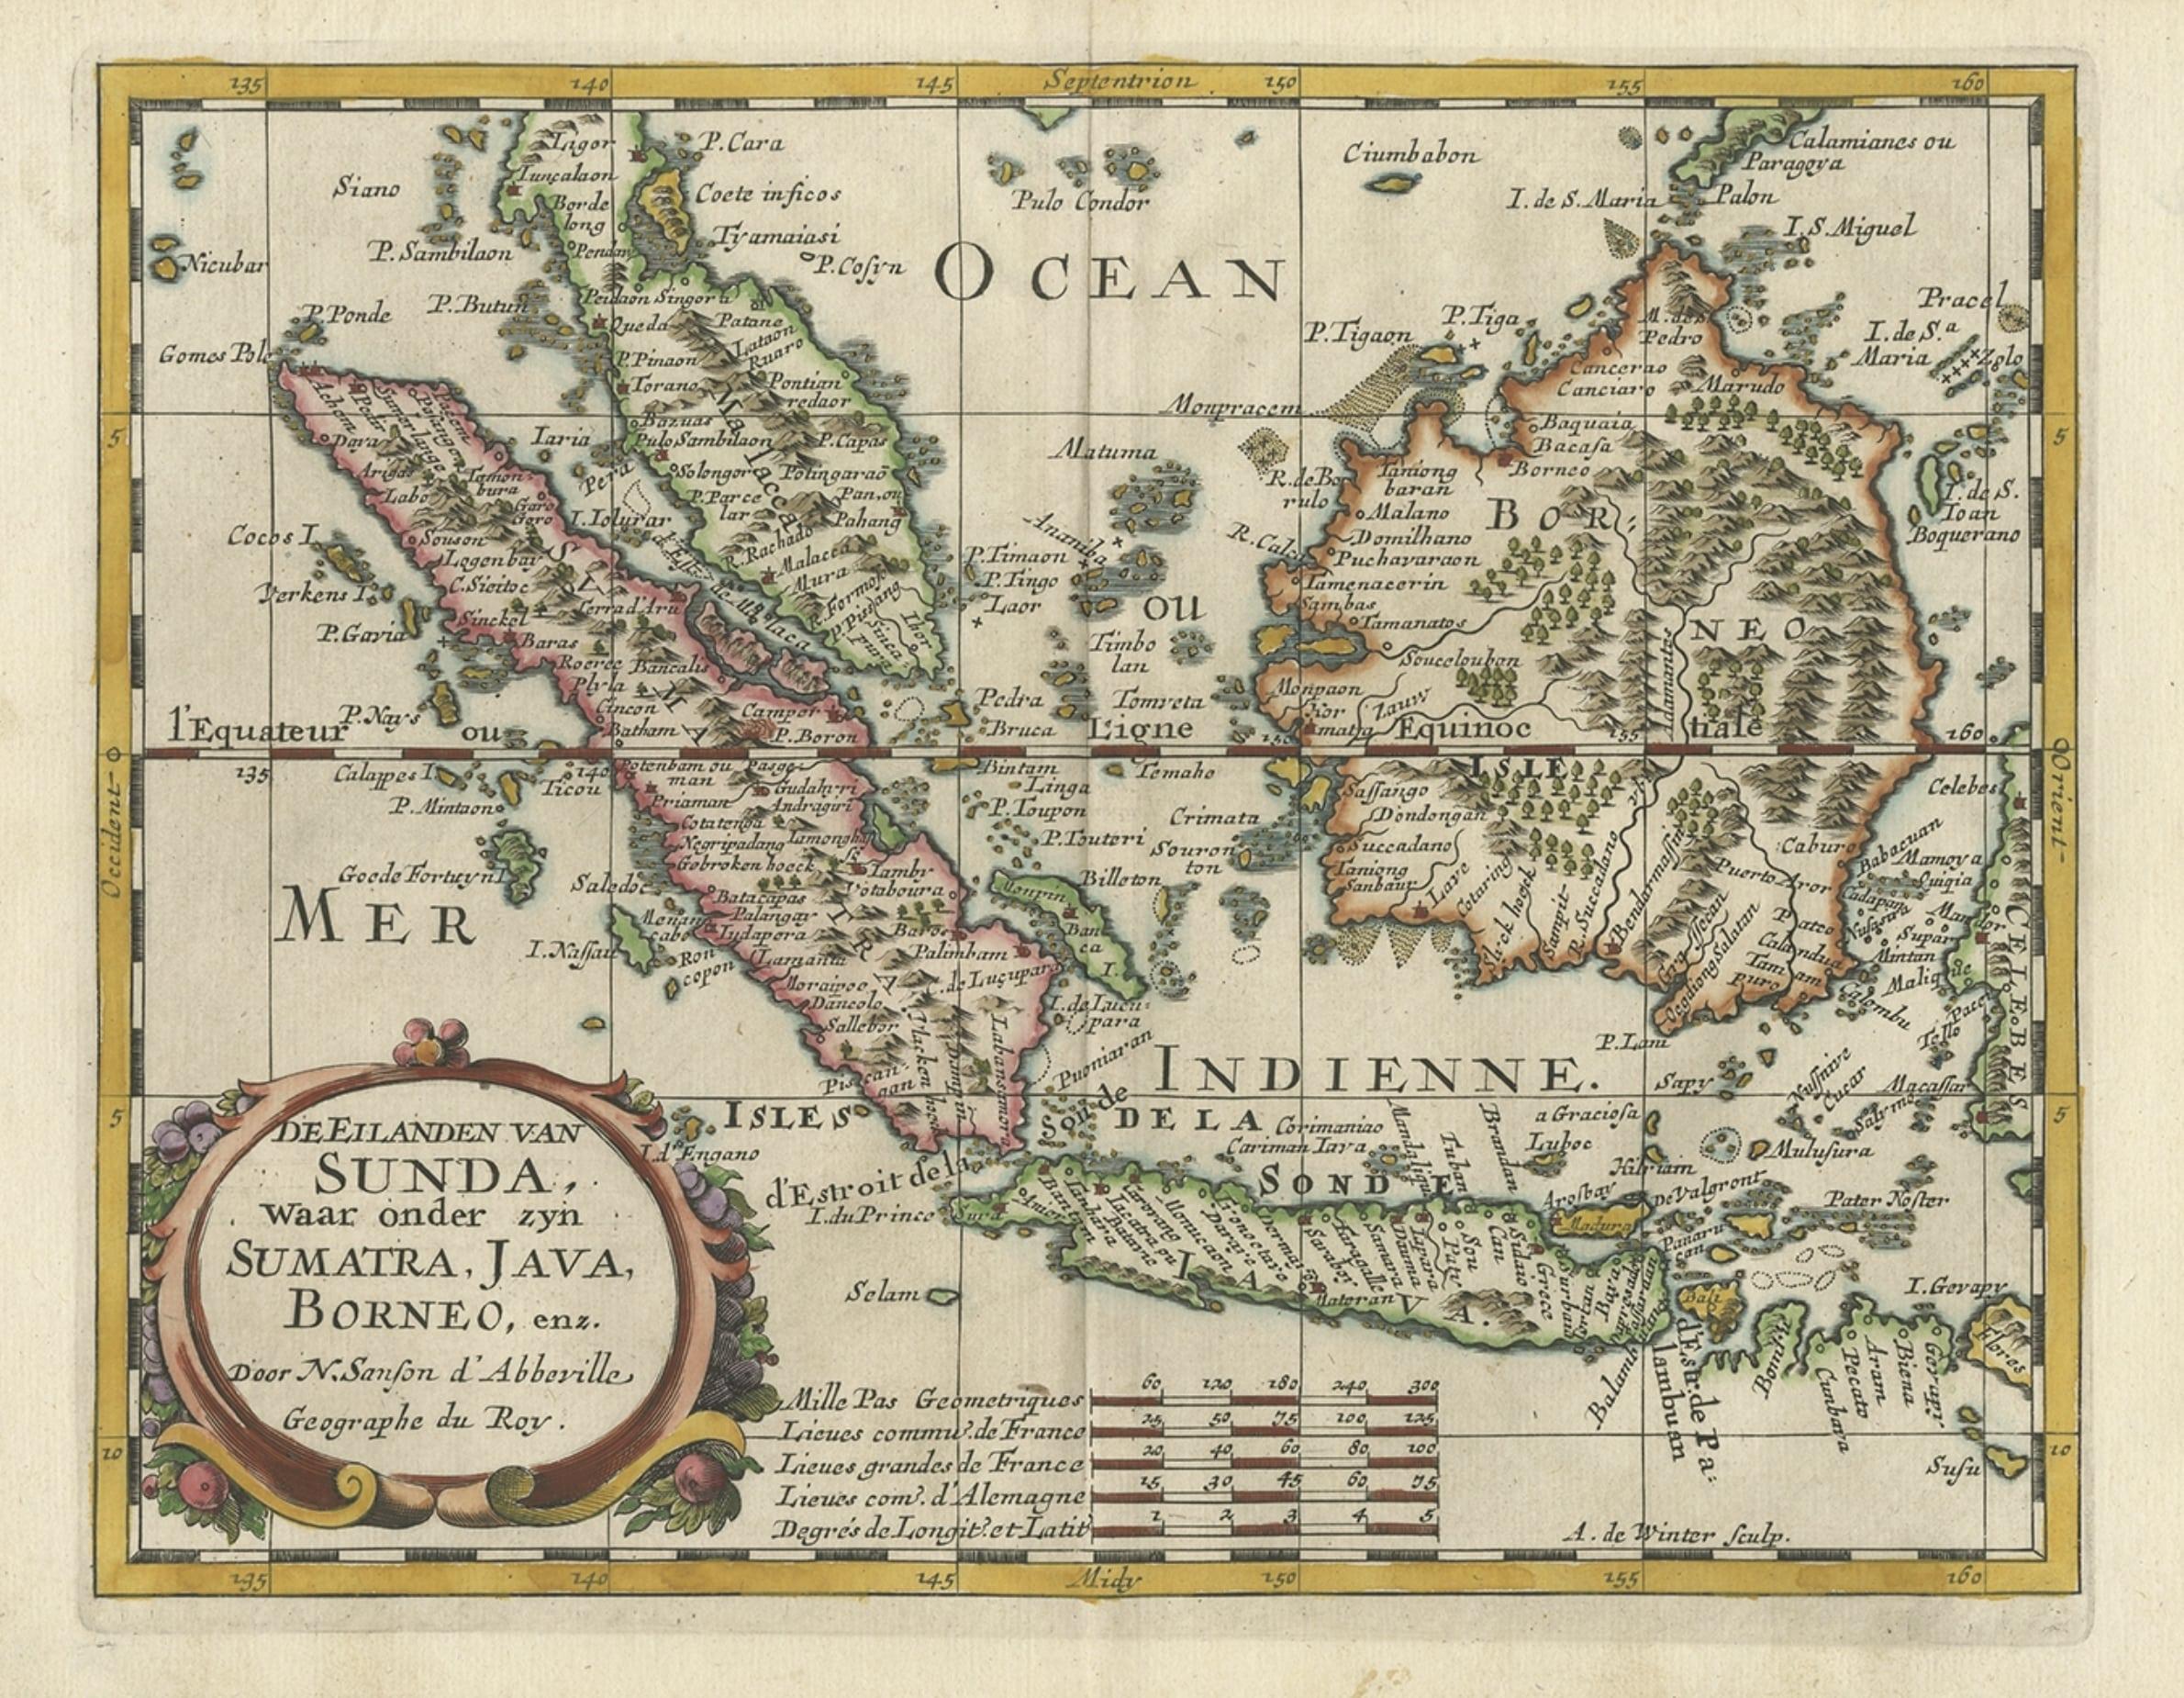 Antique map Sunda Islands titled 'De Eilanden van Sunda, waar onder zyn Sumatra, Java, Borneo enz'. 

Old map of the Bangka Belitun Islands, part of the Greater Sunda Islands, including present-day Java, Sumatra, Borneo, part of Malaysia. Includes